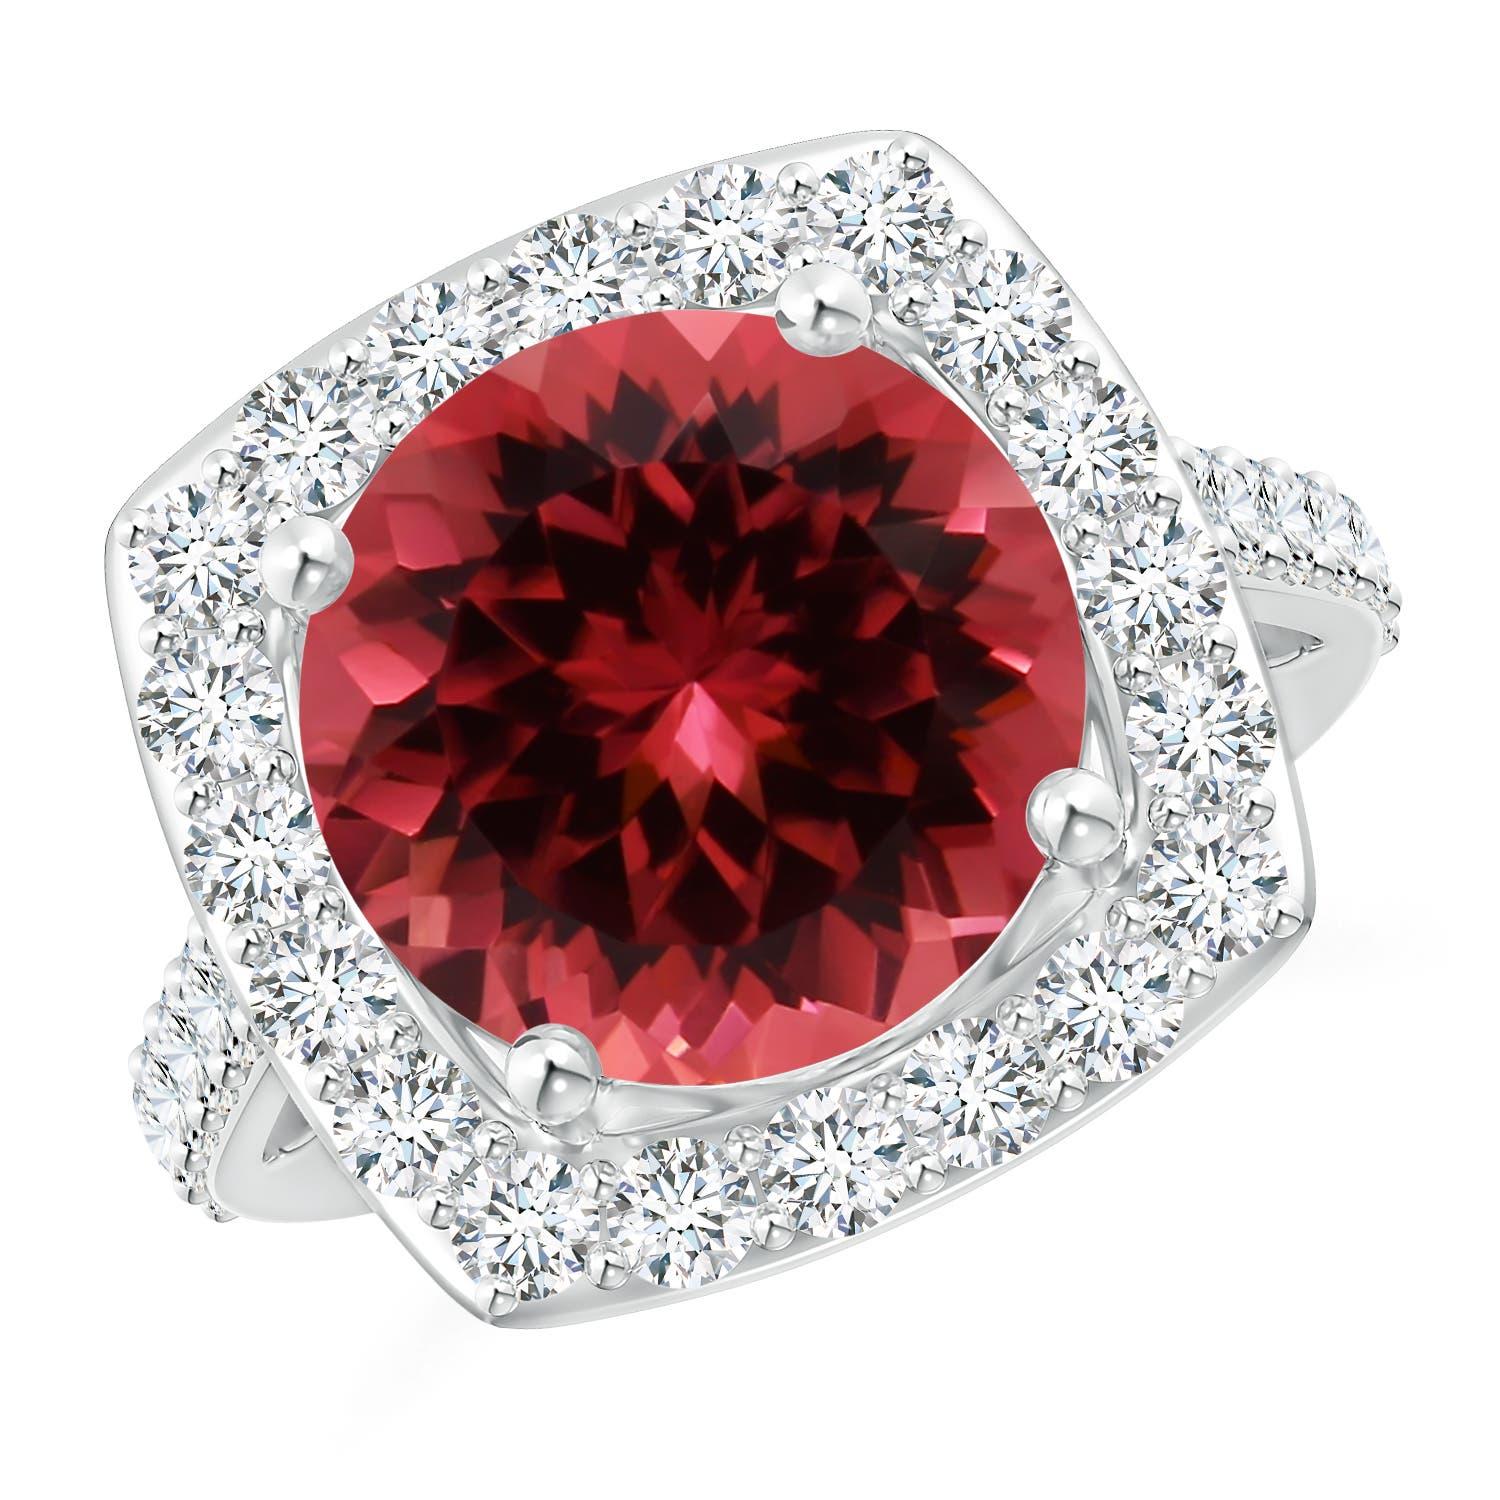 ANGARA Bague halo de diamants et tourmaline rose de 2,15 carats certifiée GIA en or blanc 18 carats